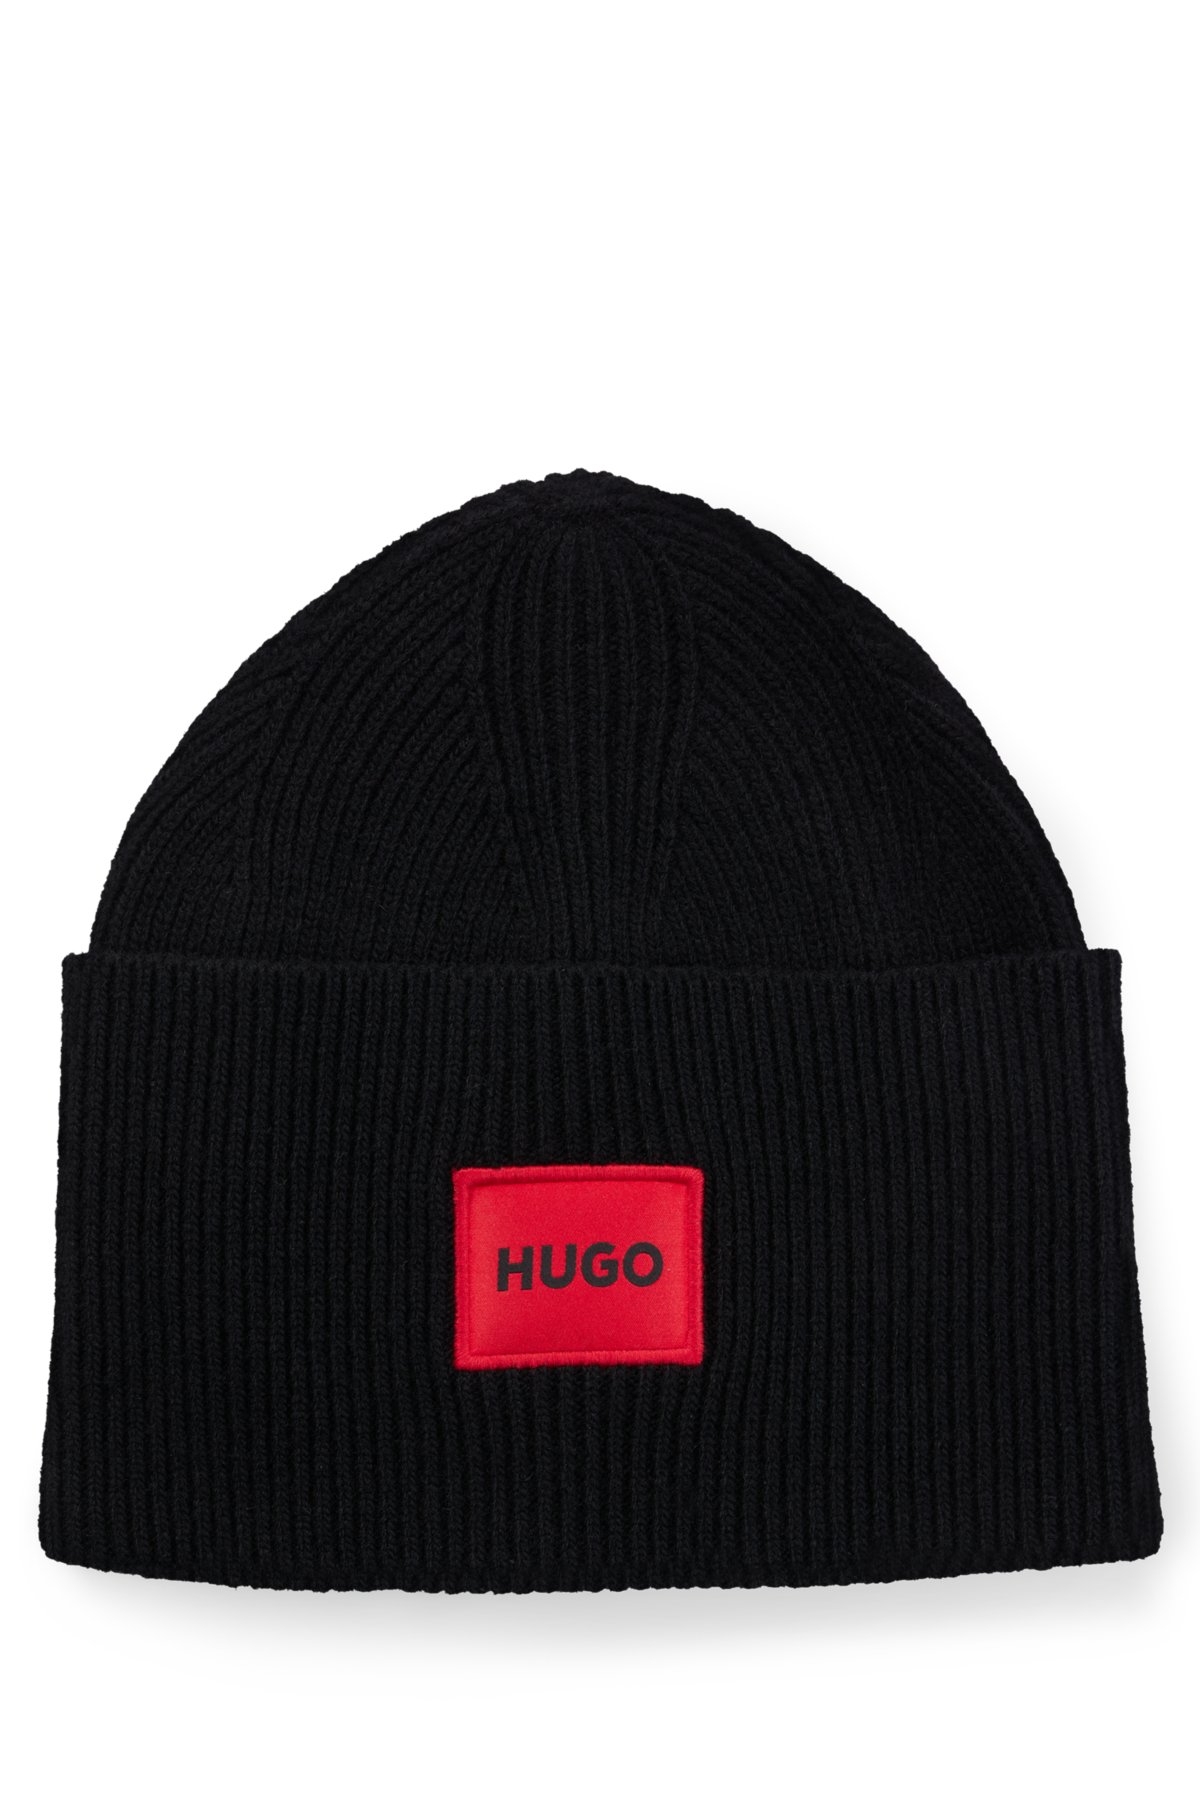 Hugo Boss Hats, Caps & Beanies